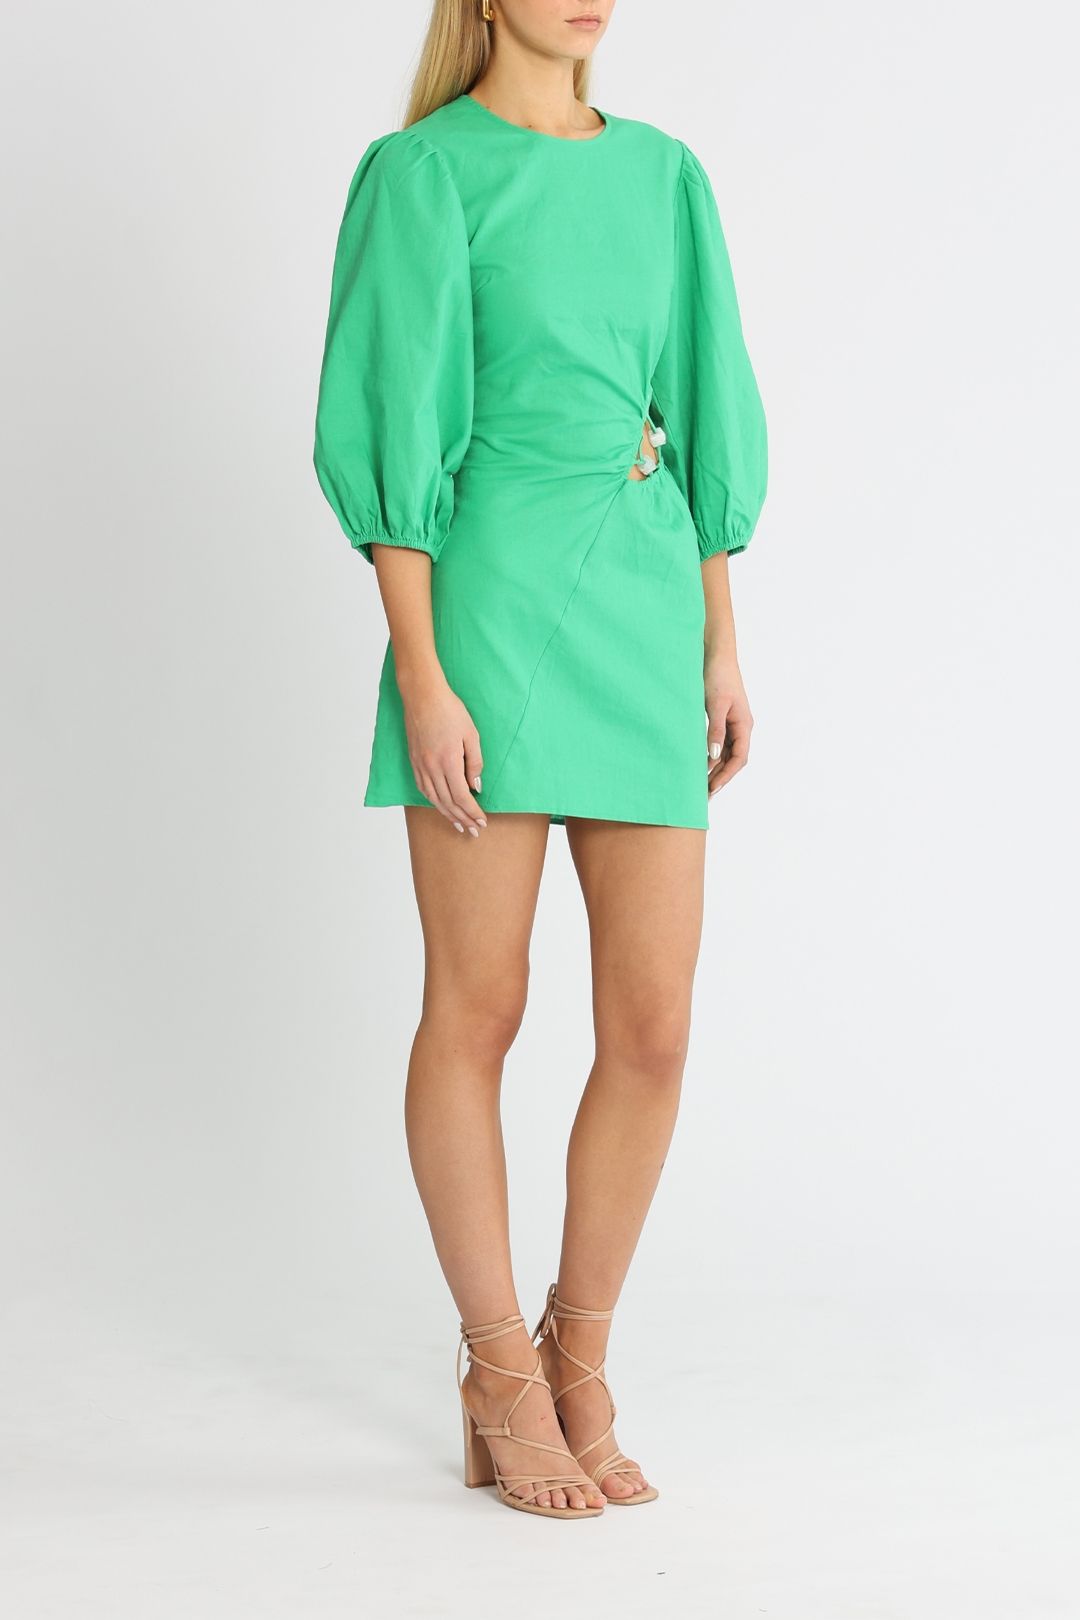 Suboo Elodie Mini Dress green